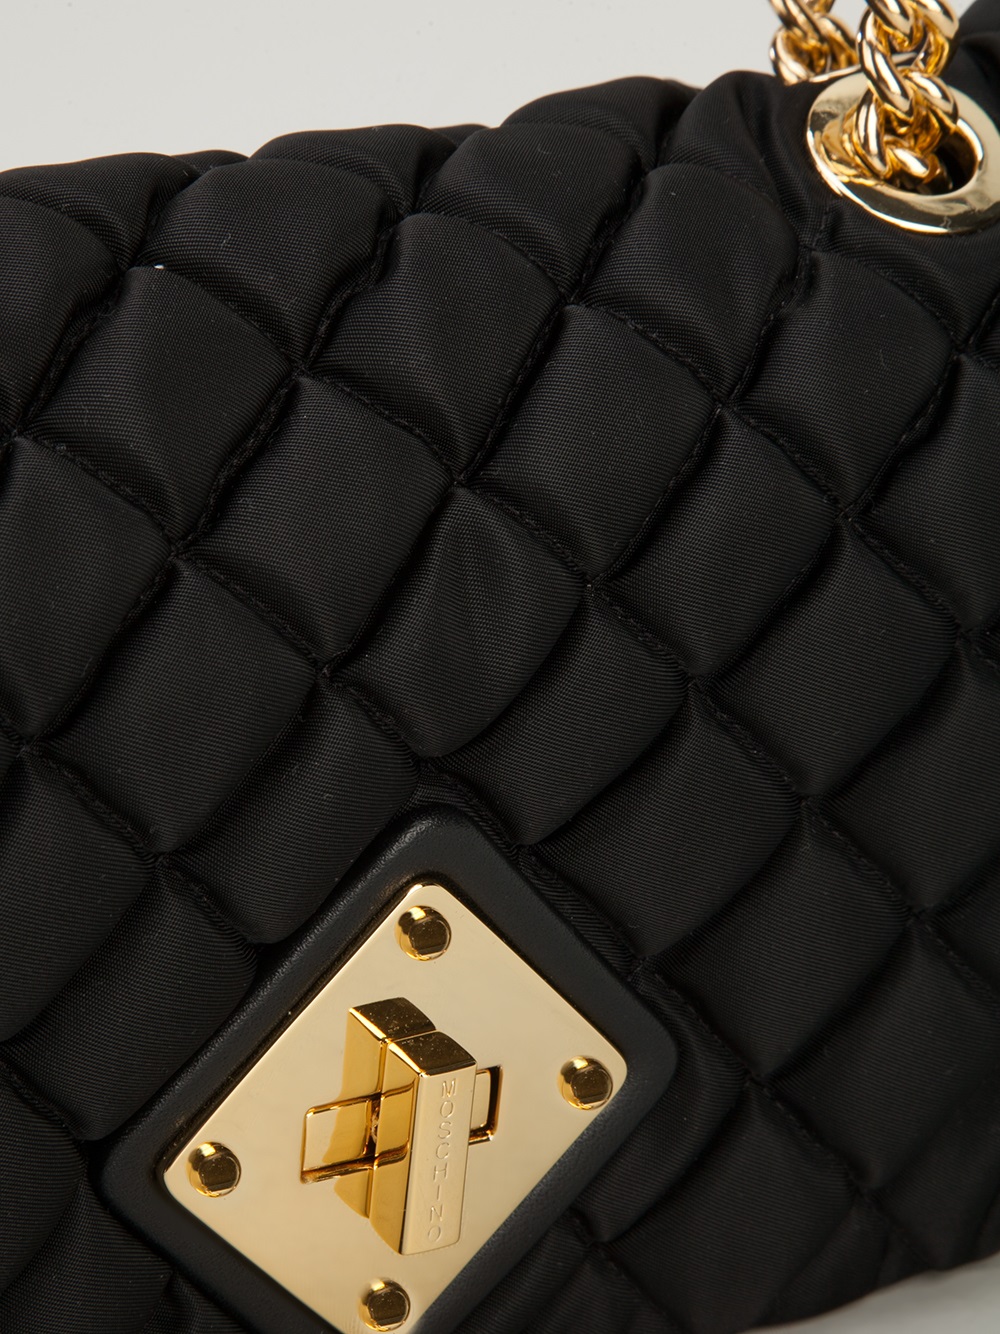 Moschino Shoulder Bag in Black | Lyst